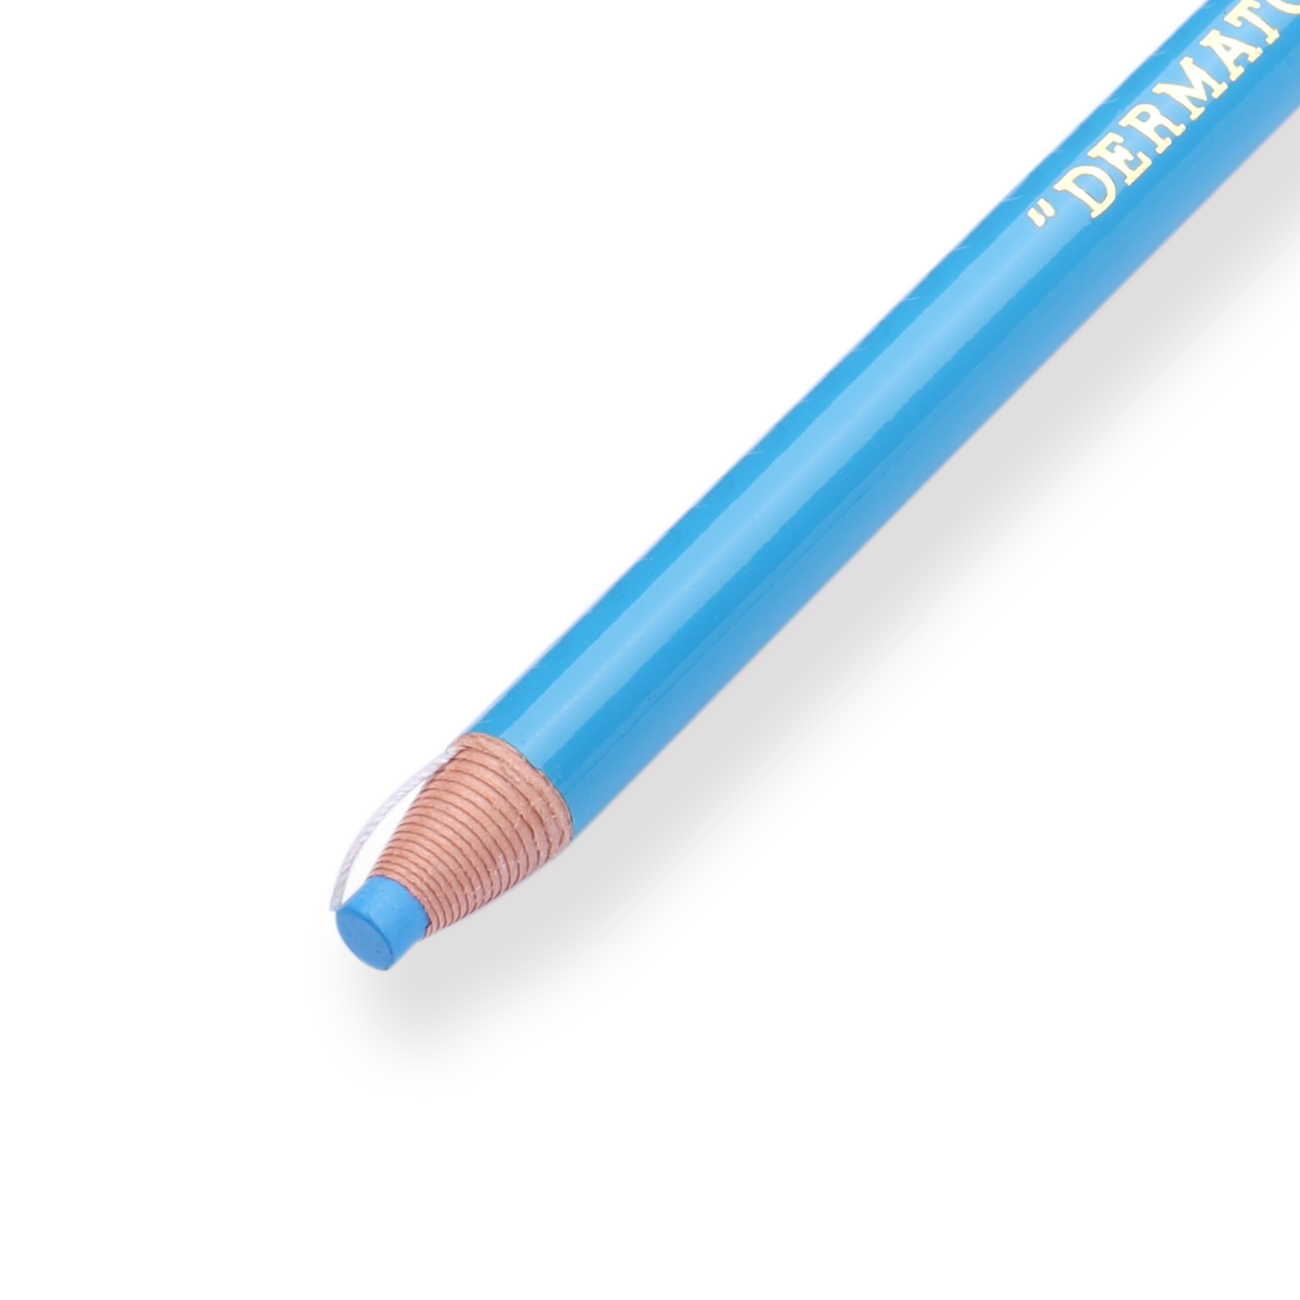 Uni-ball Dermatograph 7600 Colored Pencil - Light Blue - Stationery Pal